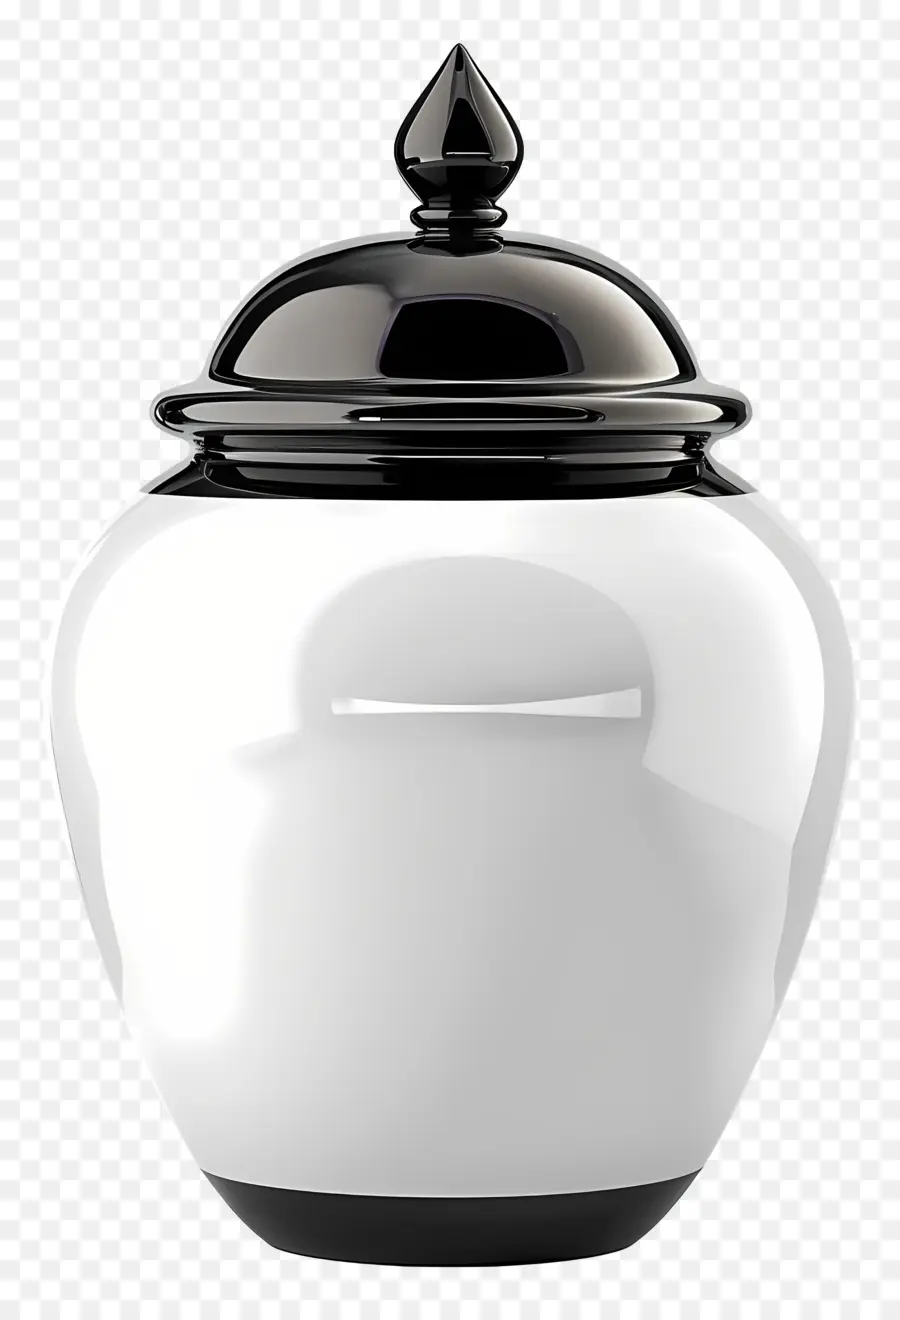 Keramikaufbewahrungsglas Keramikglas Schwarz -Weiß -Griff Speicher - Schwarz -Weiß -Keramikglas mit Griff